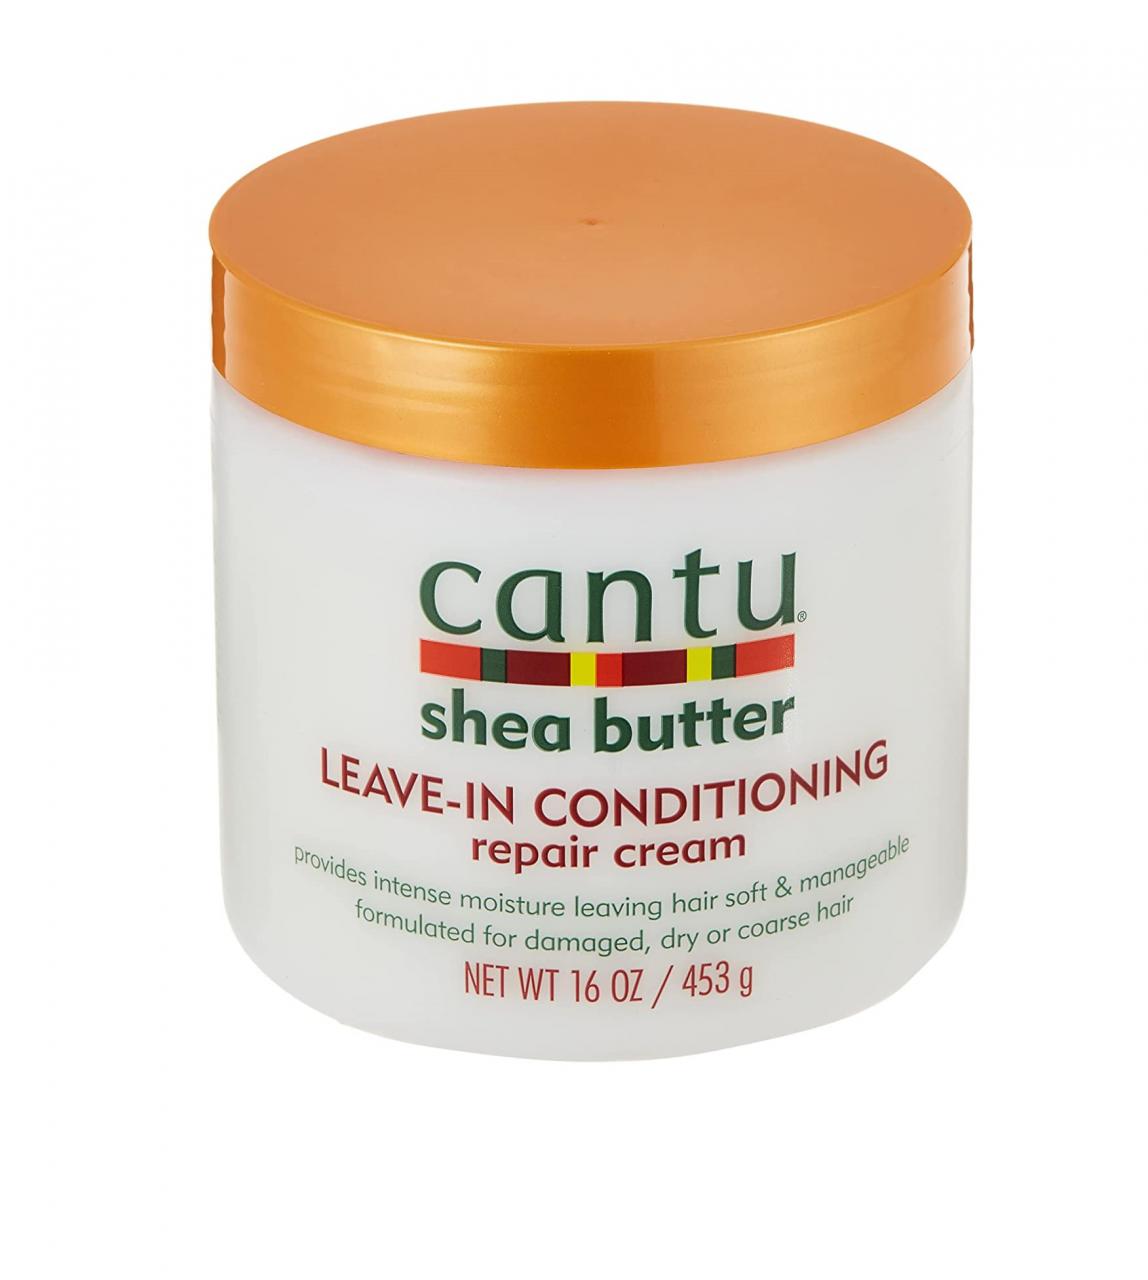 Cantù shea leave-in conditioner cream jar